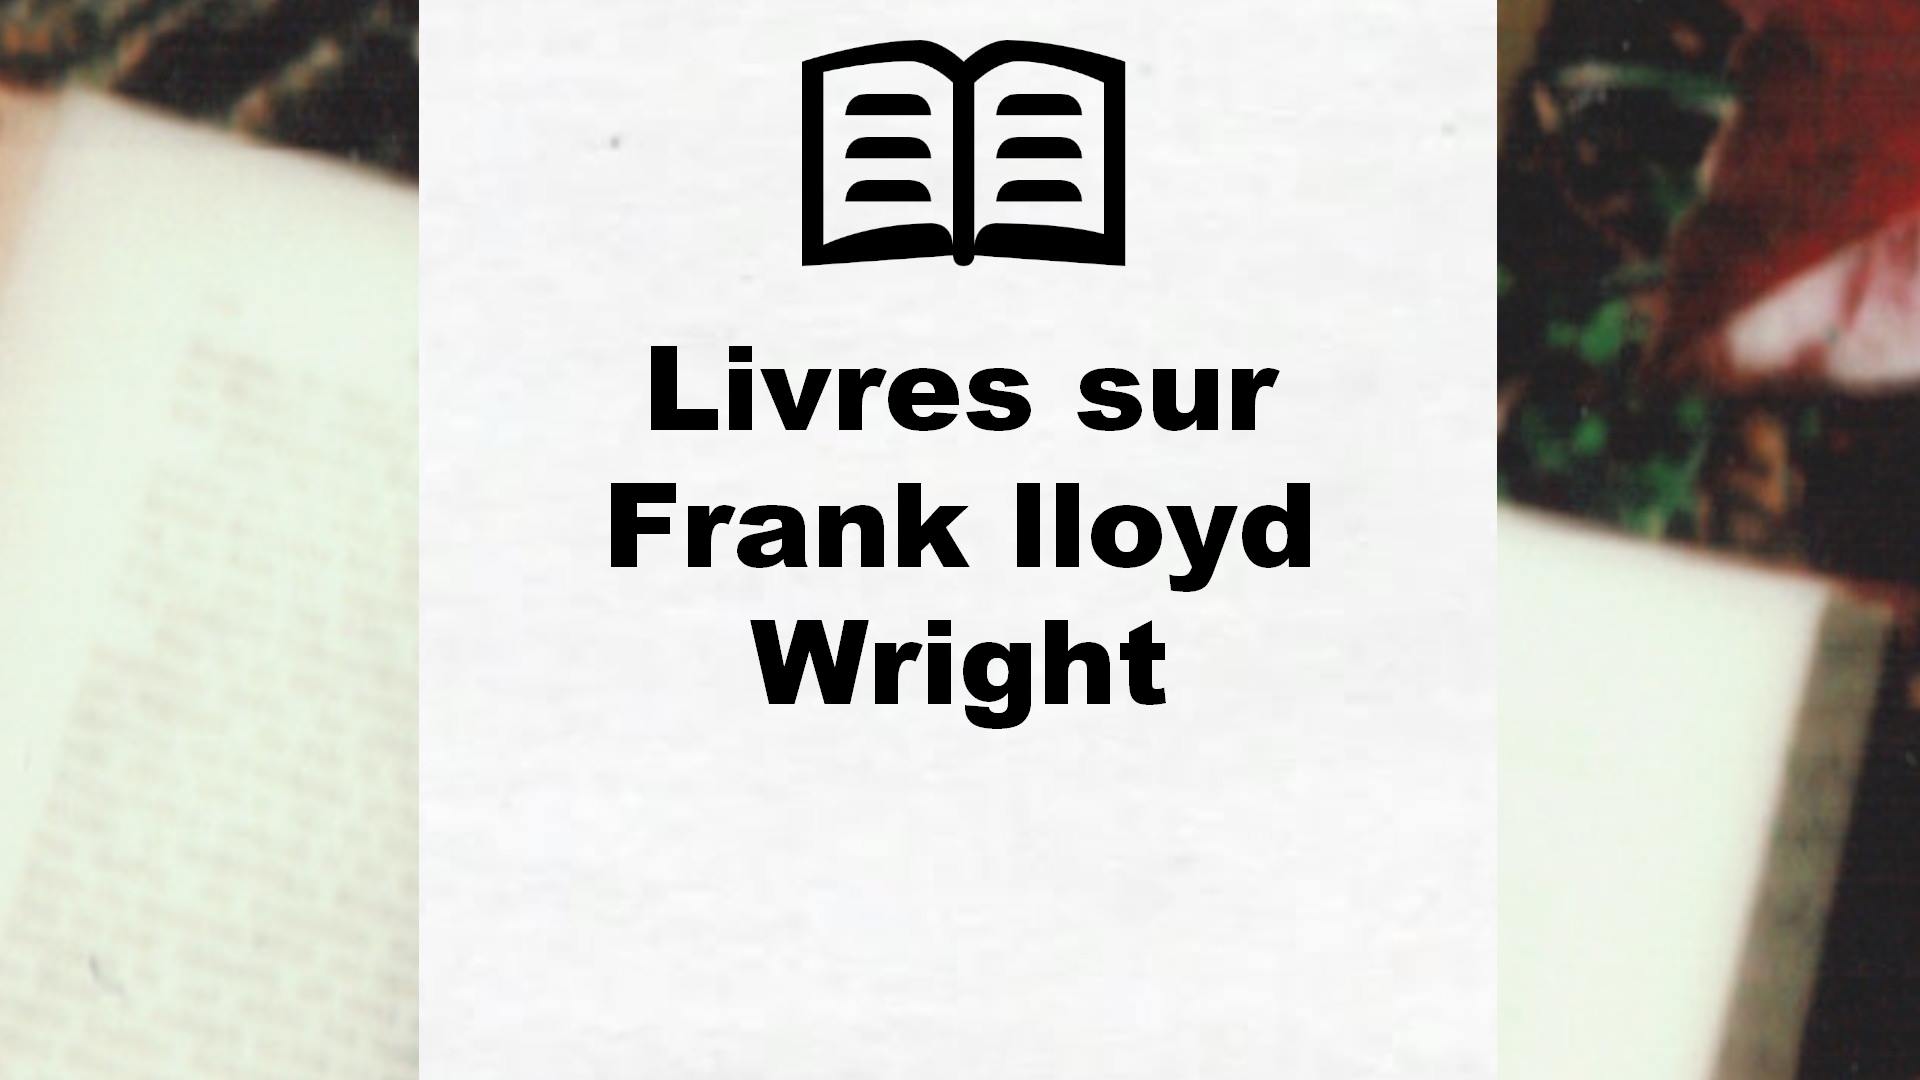 Livres sur Frank lloyd Wright